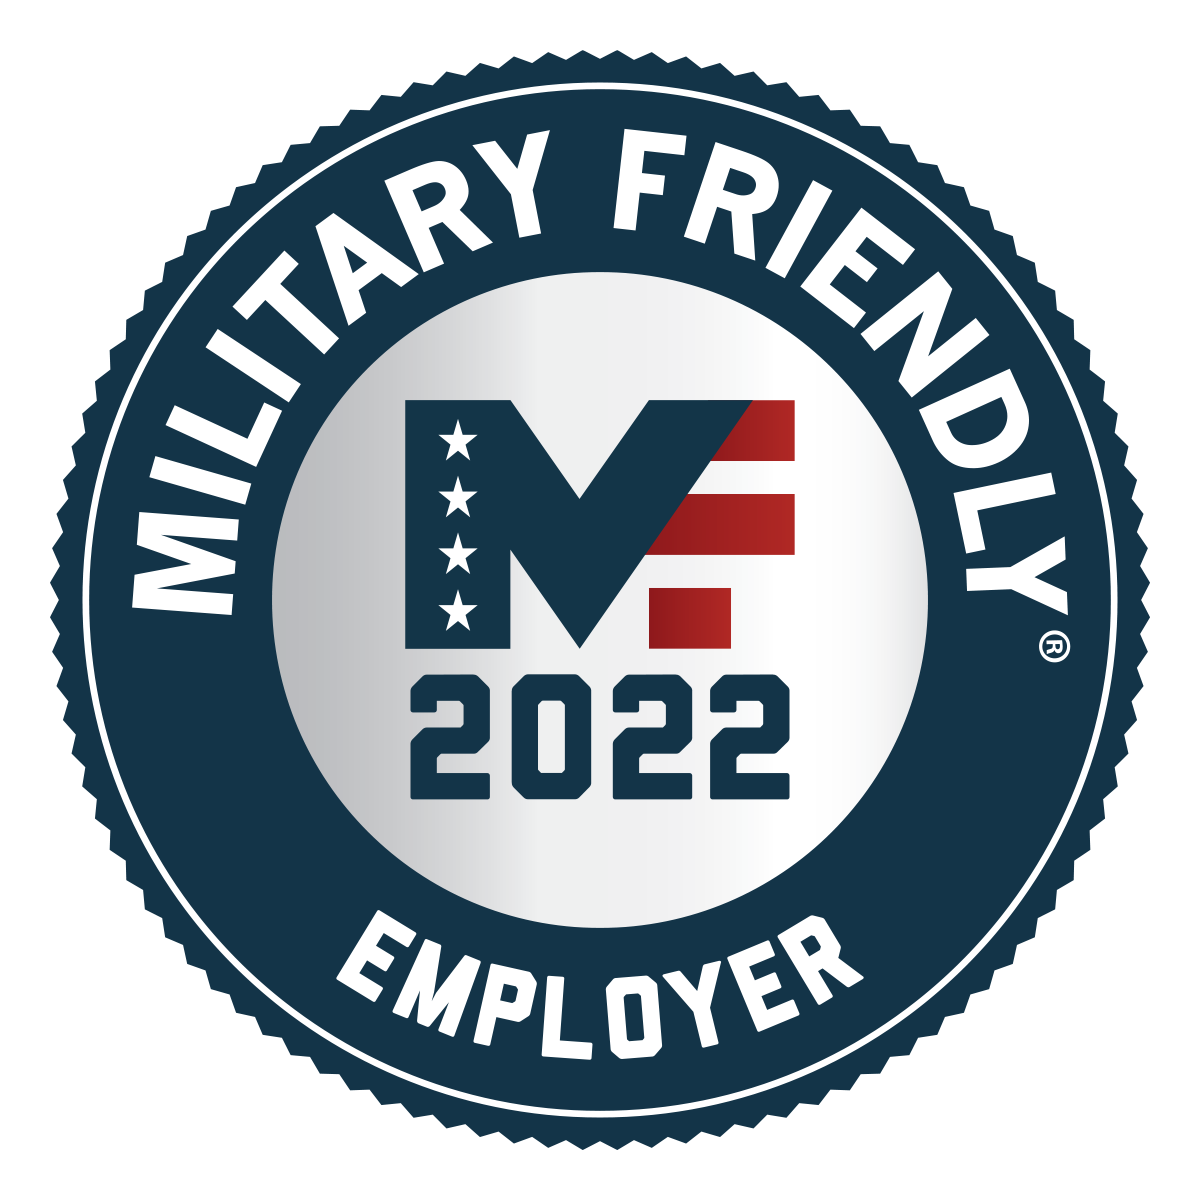 Military Friendly Employer award